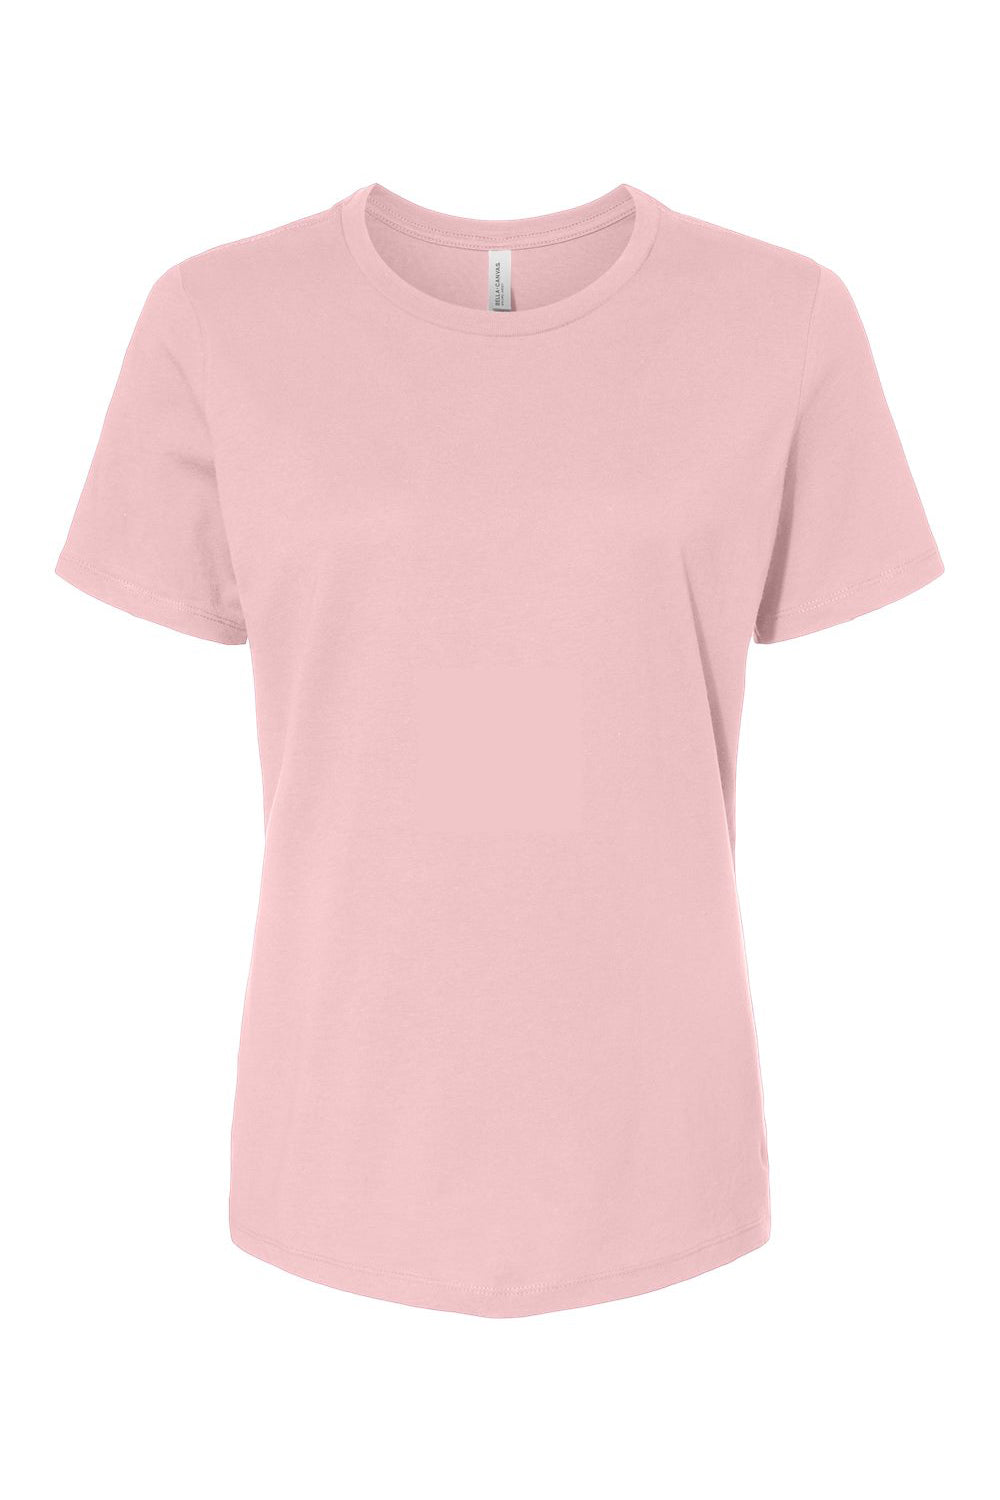 Bella + Canvas BC6400/B6400/6400 Womens Relaxed Jersey Short Sleeve Crewneck T-Shirt Pink Flat Front